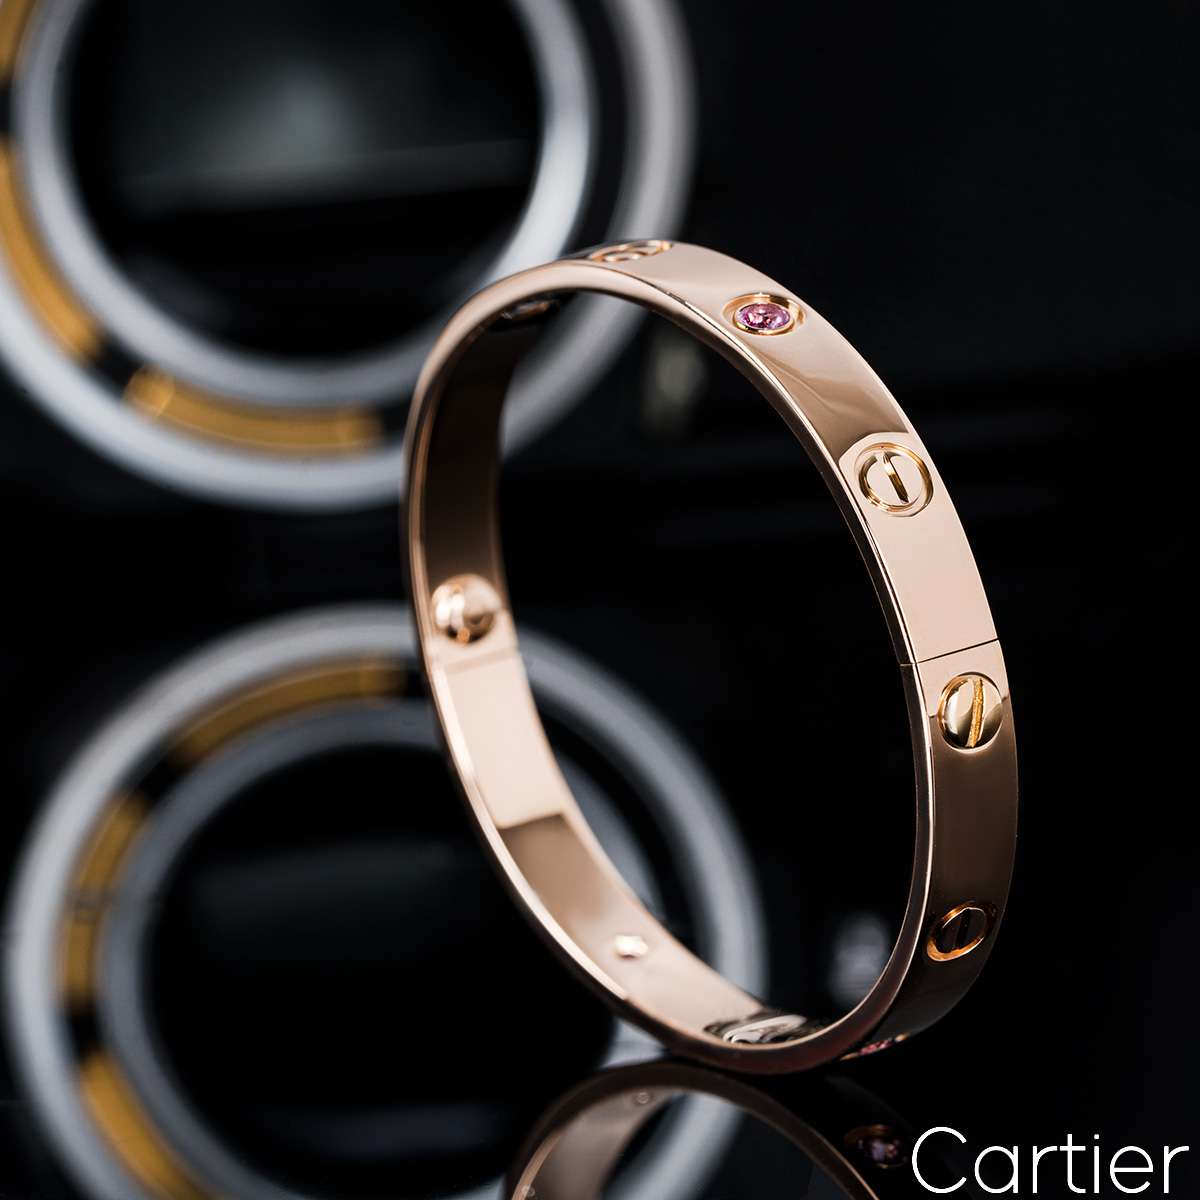 Cartier Rose Gold Pink Sapphire Love Bracelet Size 16 B60311116